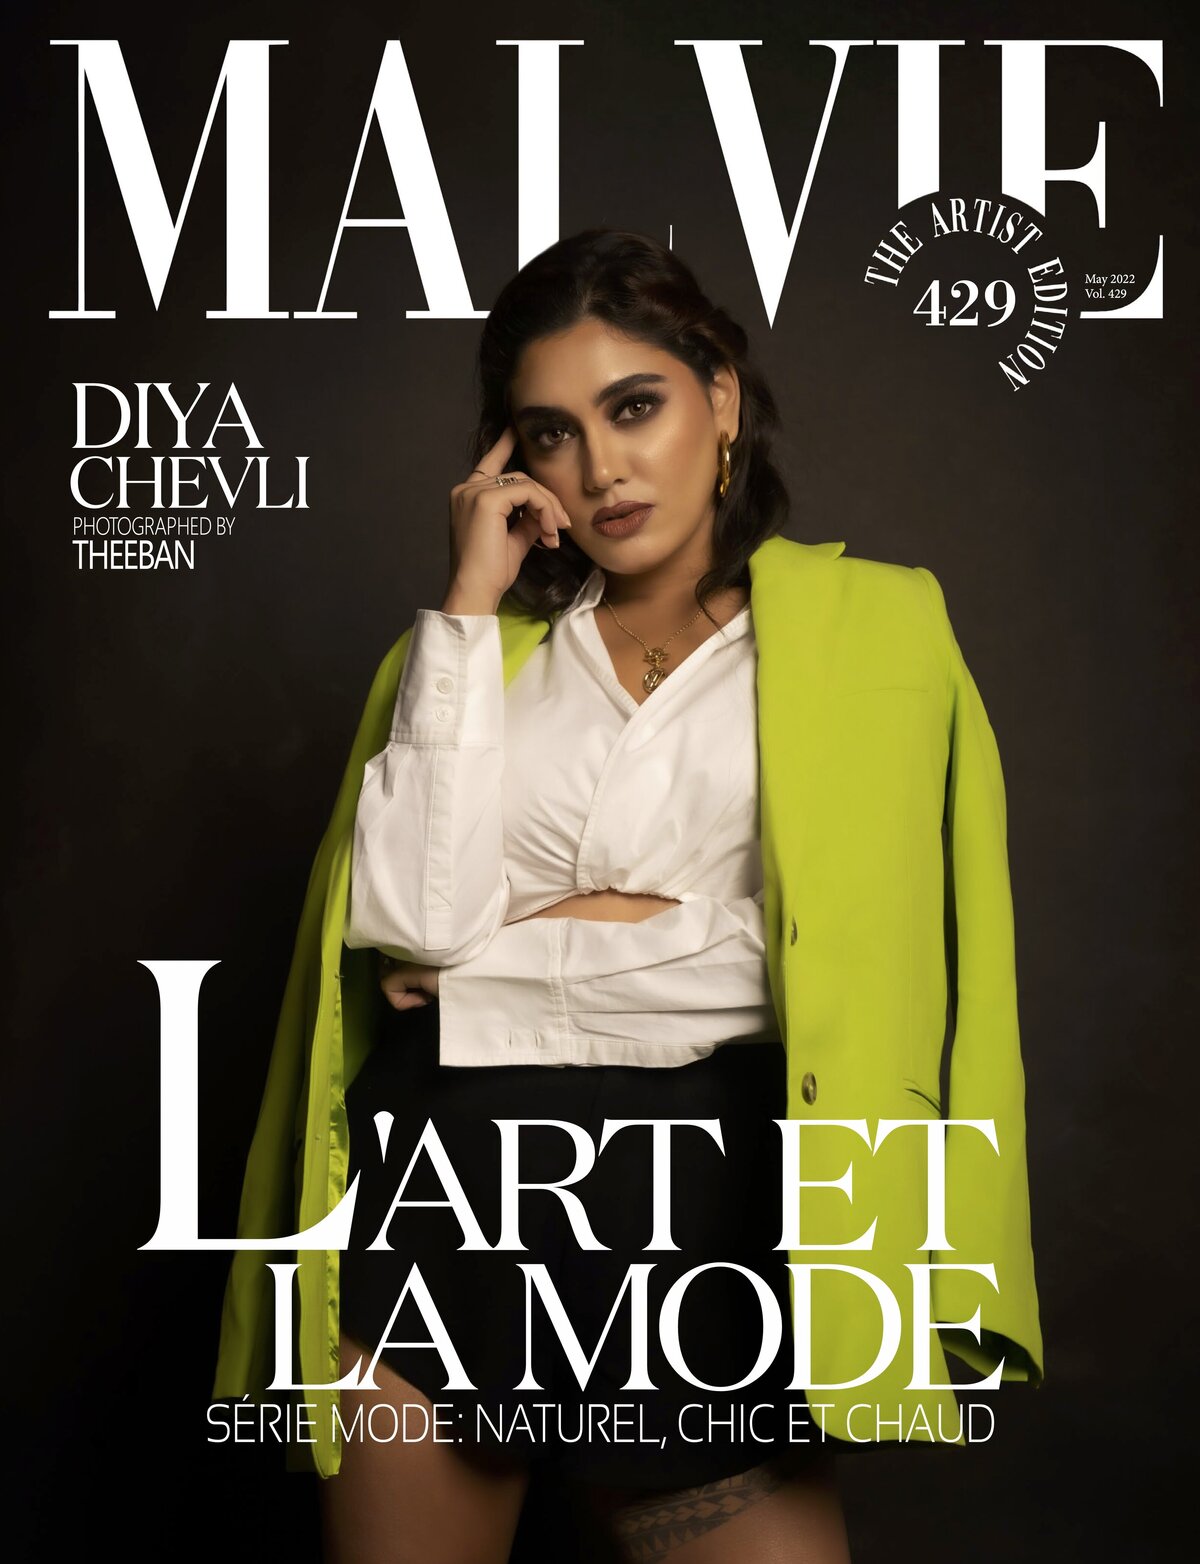 1MALVIE Magazine The Artist Edition Vol 429 May 2022